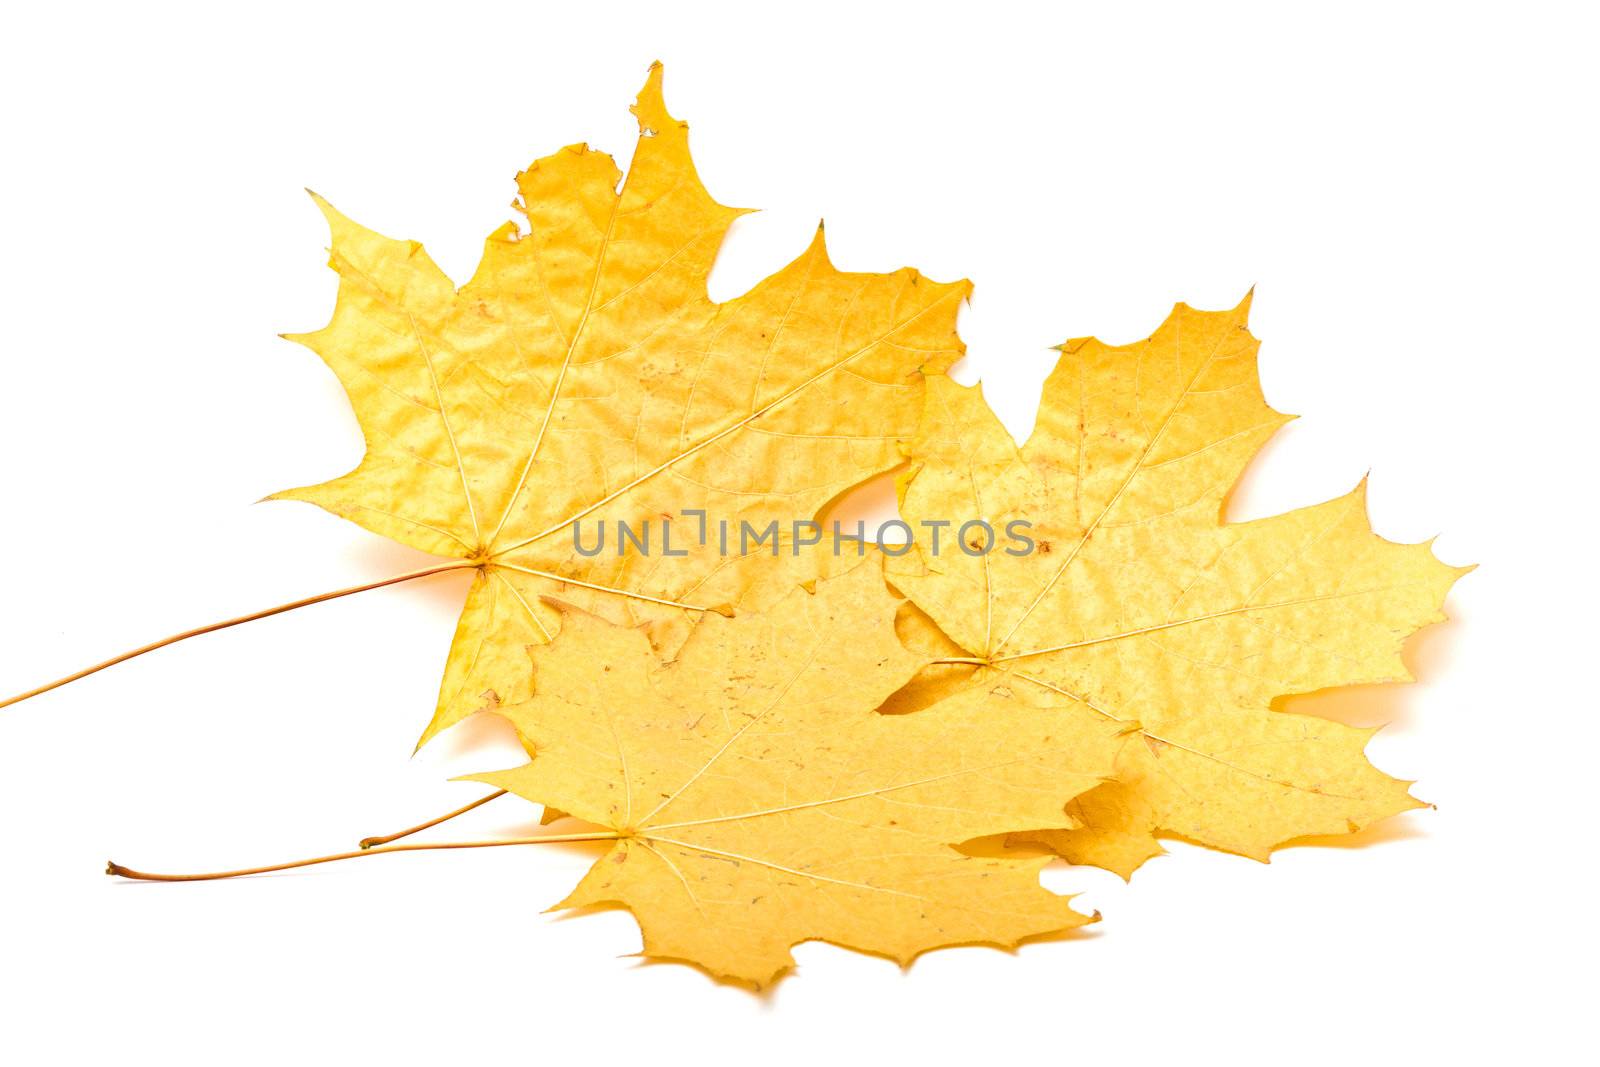 photo of yellow leaf on white background